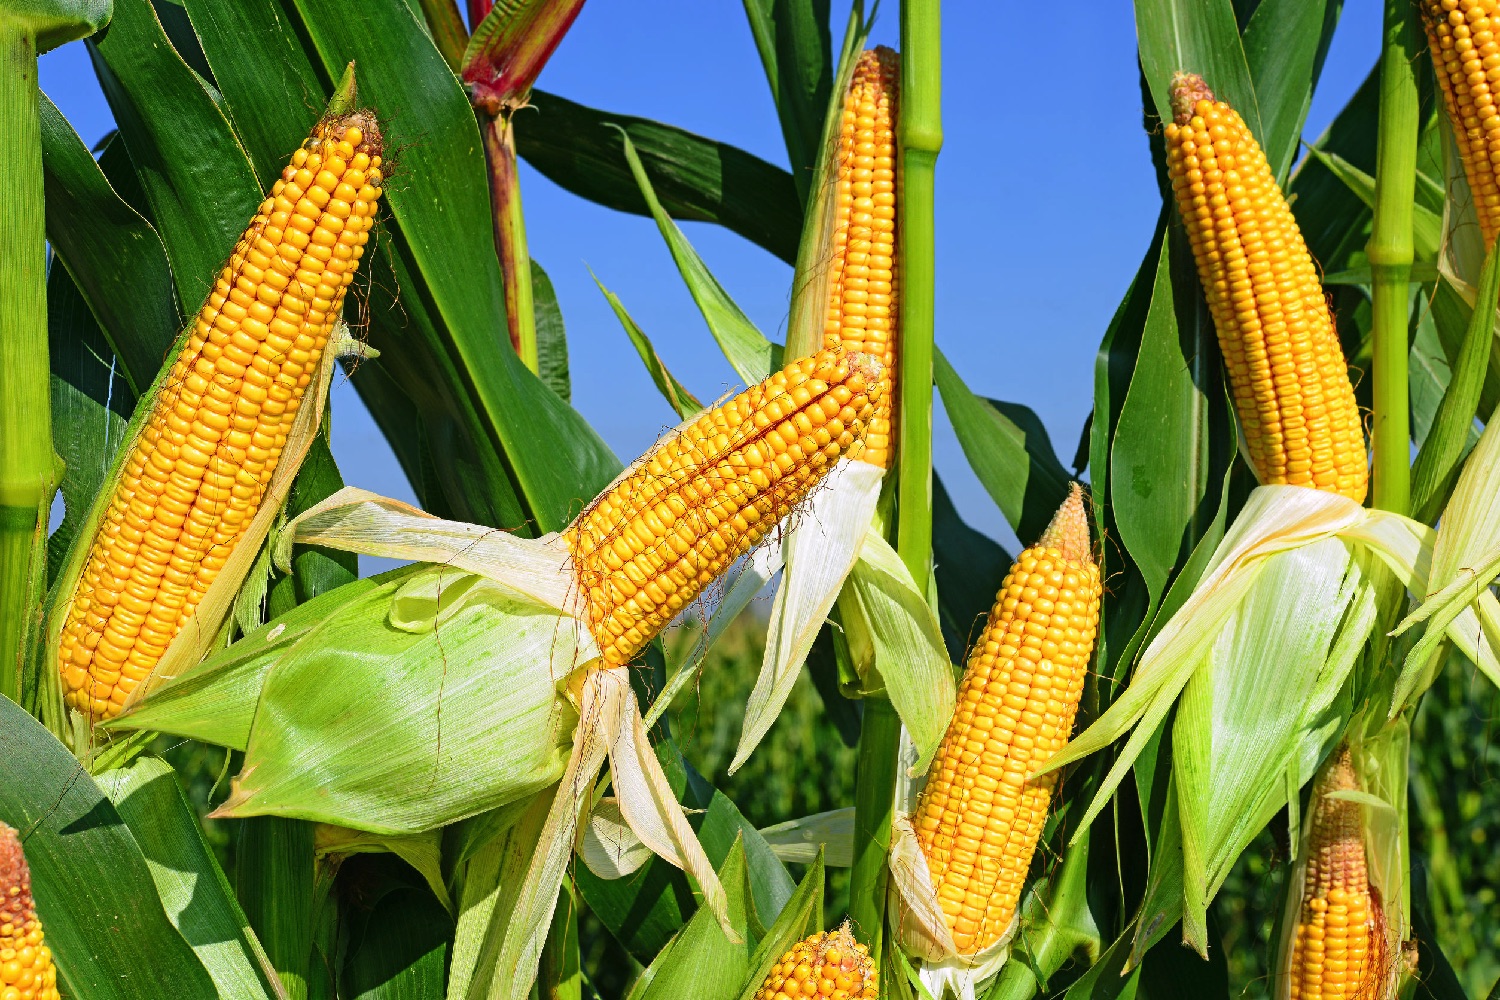 Gene-edited corn